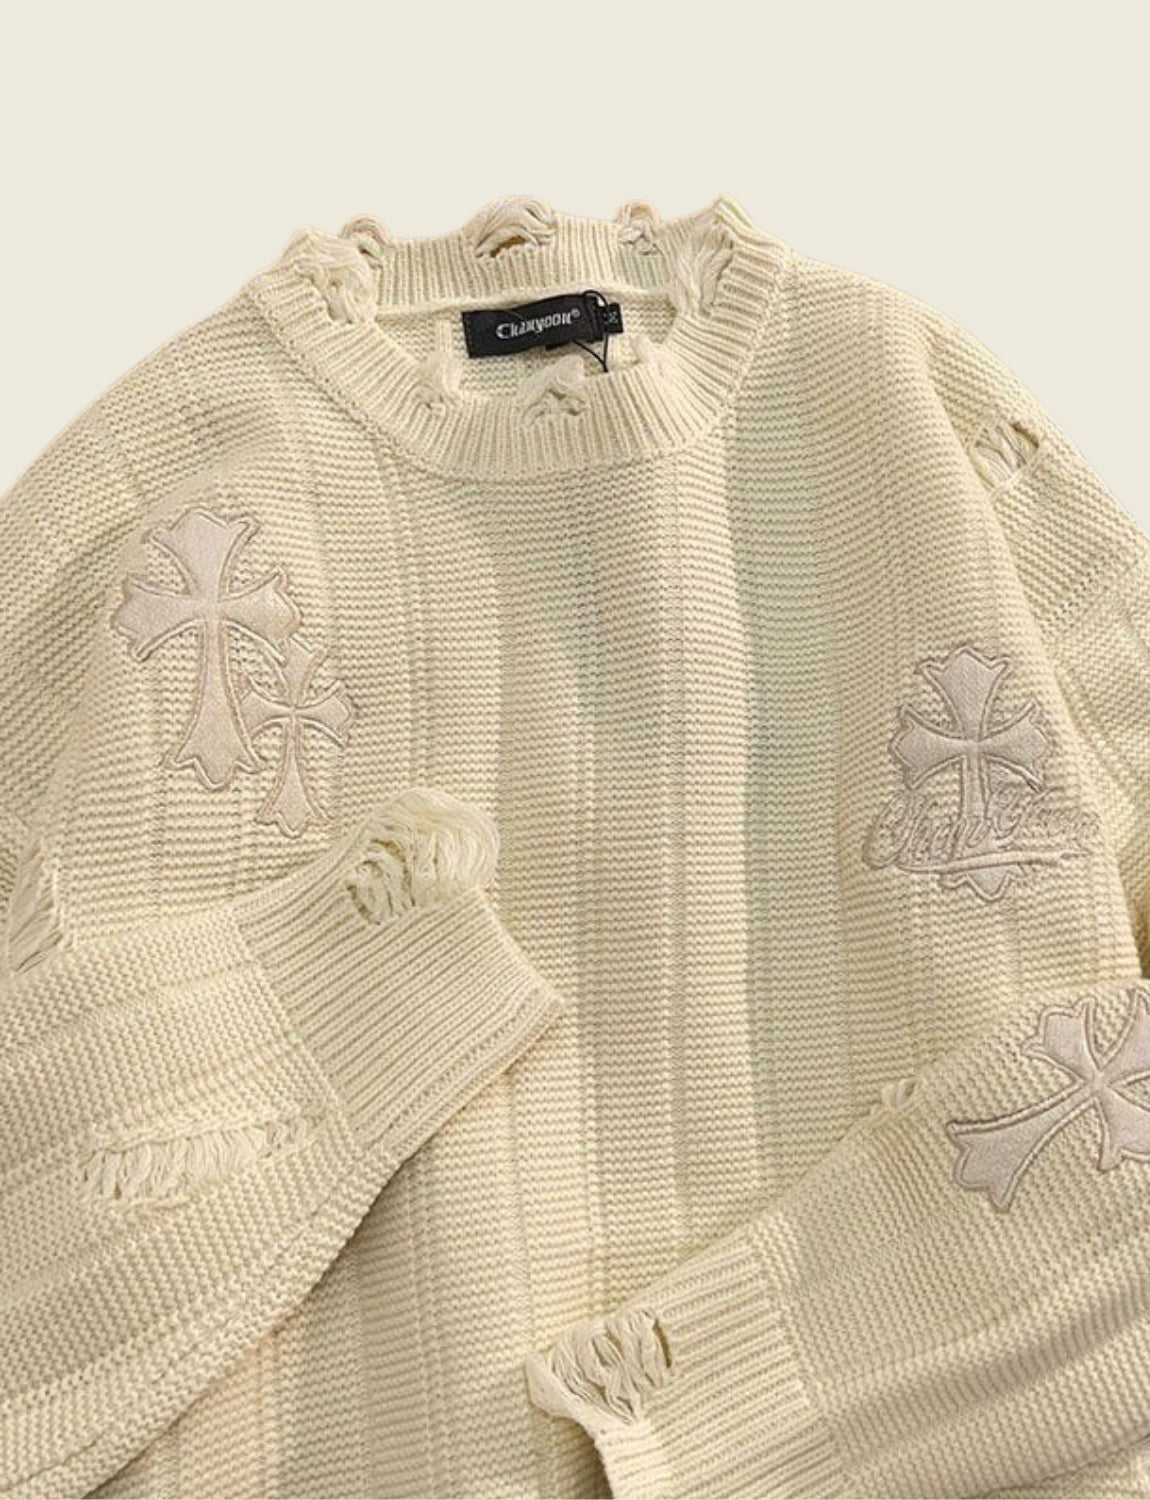 FSW® Cross Design Pullover Sweater